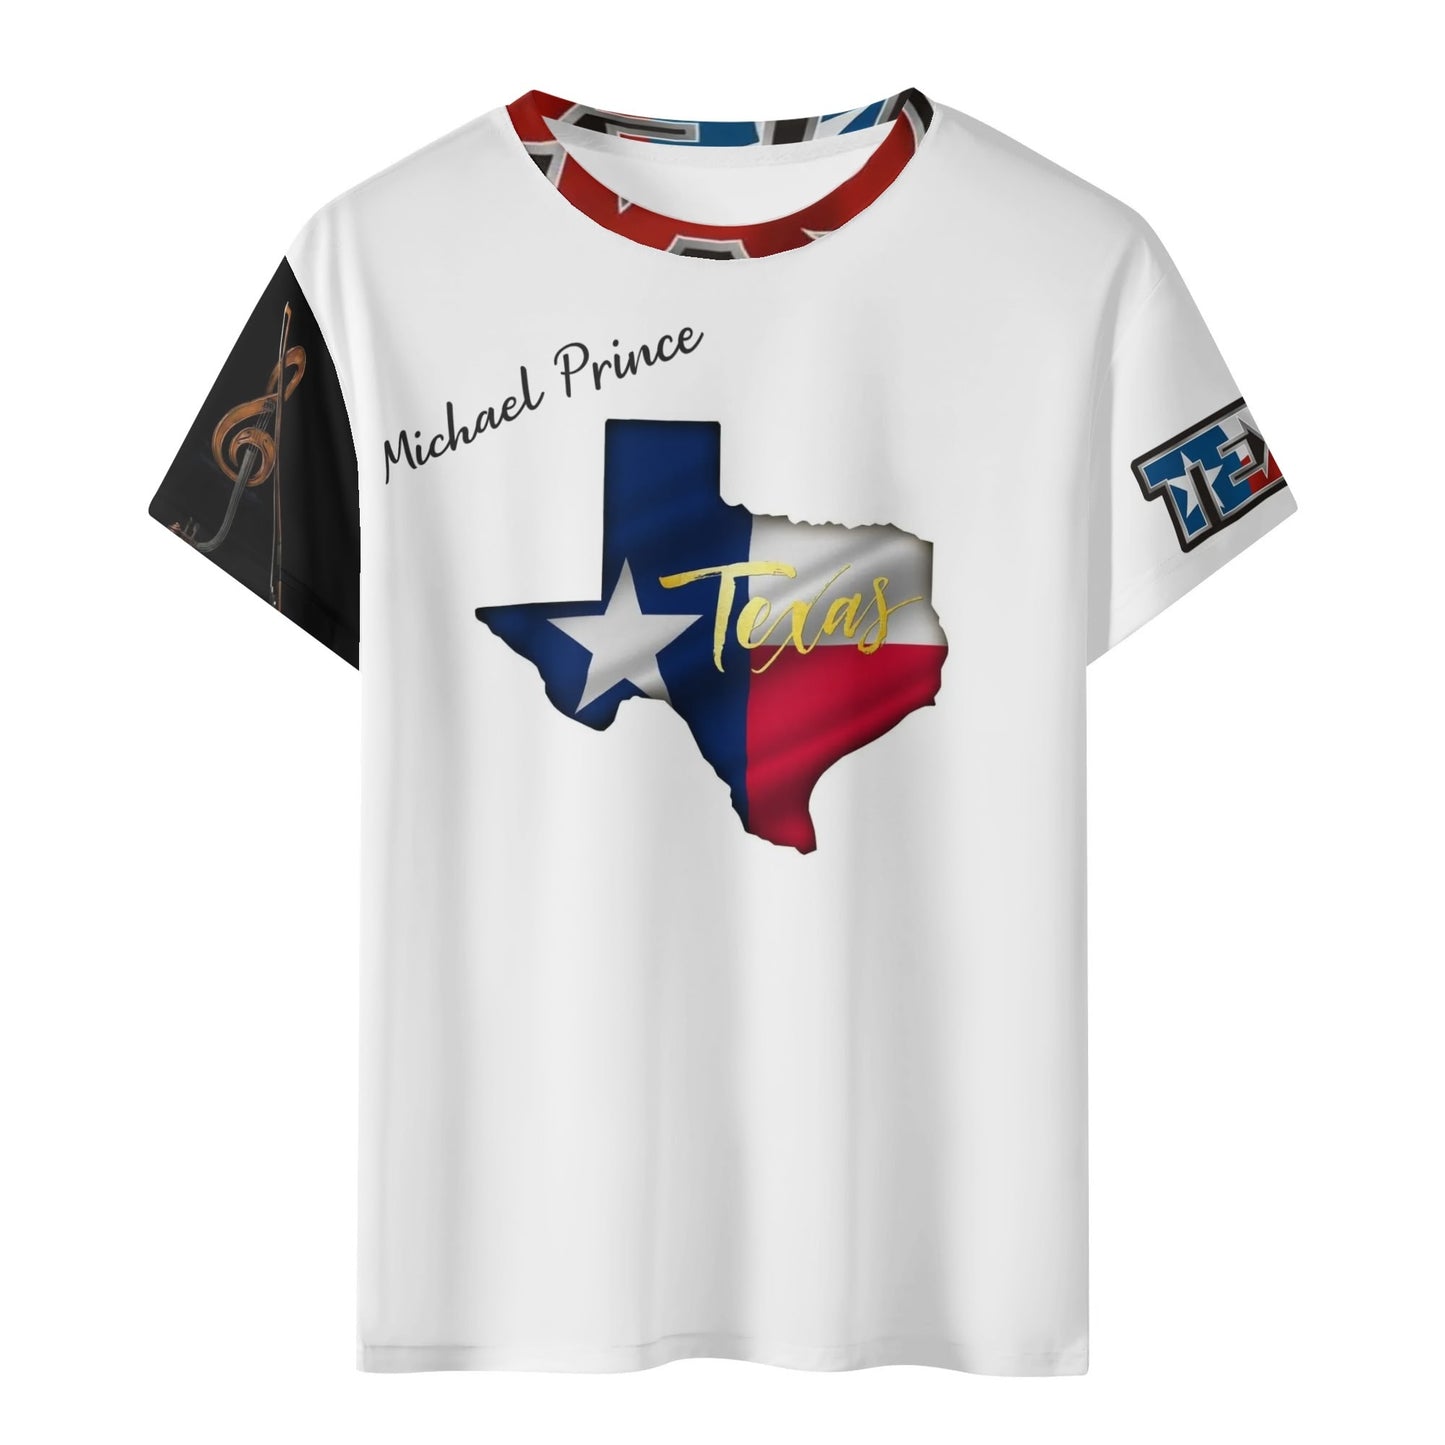 Michael Prince Violin Kids Texas Short Sleeve T-Shirt